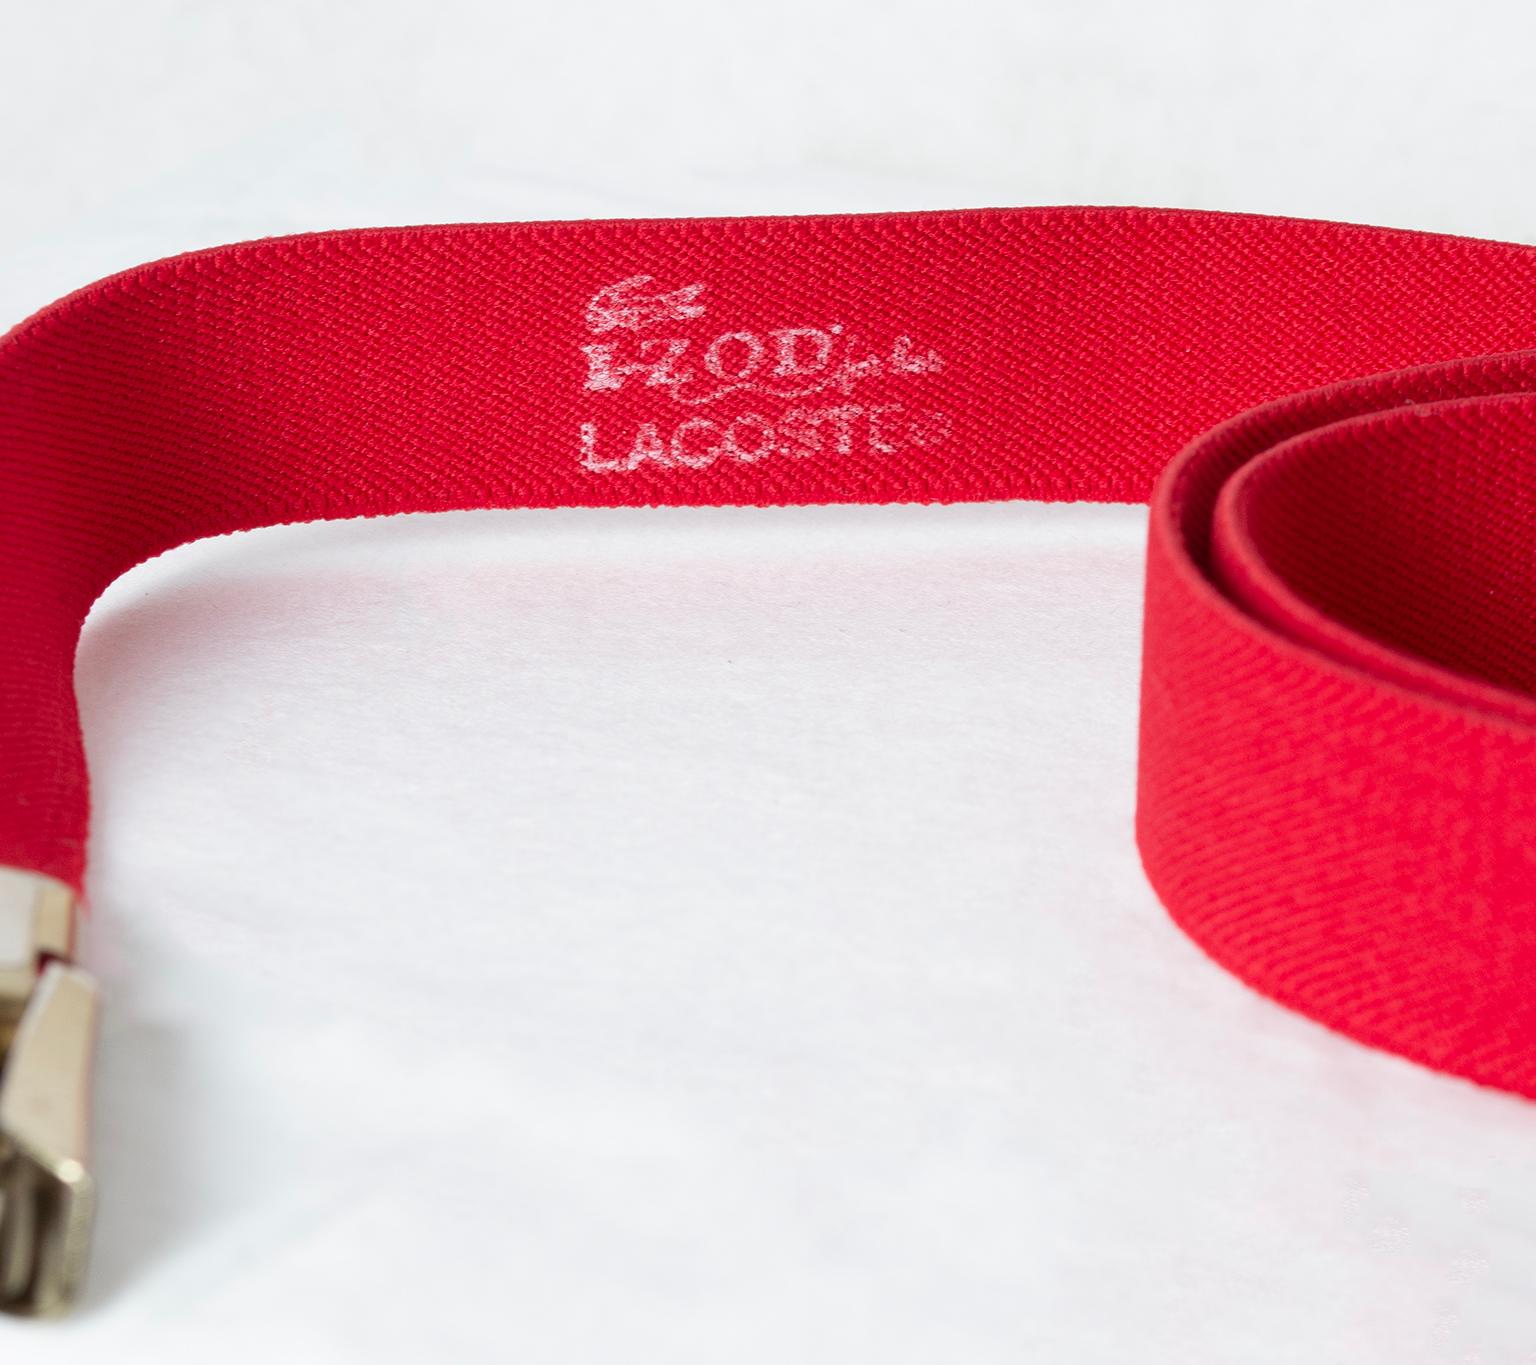 New Red Izod Lacoste Stretch Belt with Alligator Logo Buckle – Adjustable, 1960s 1